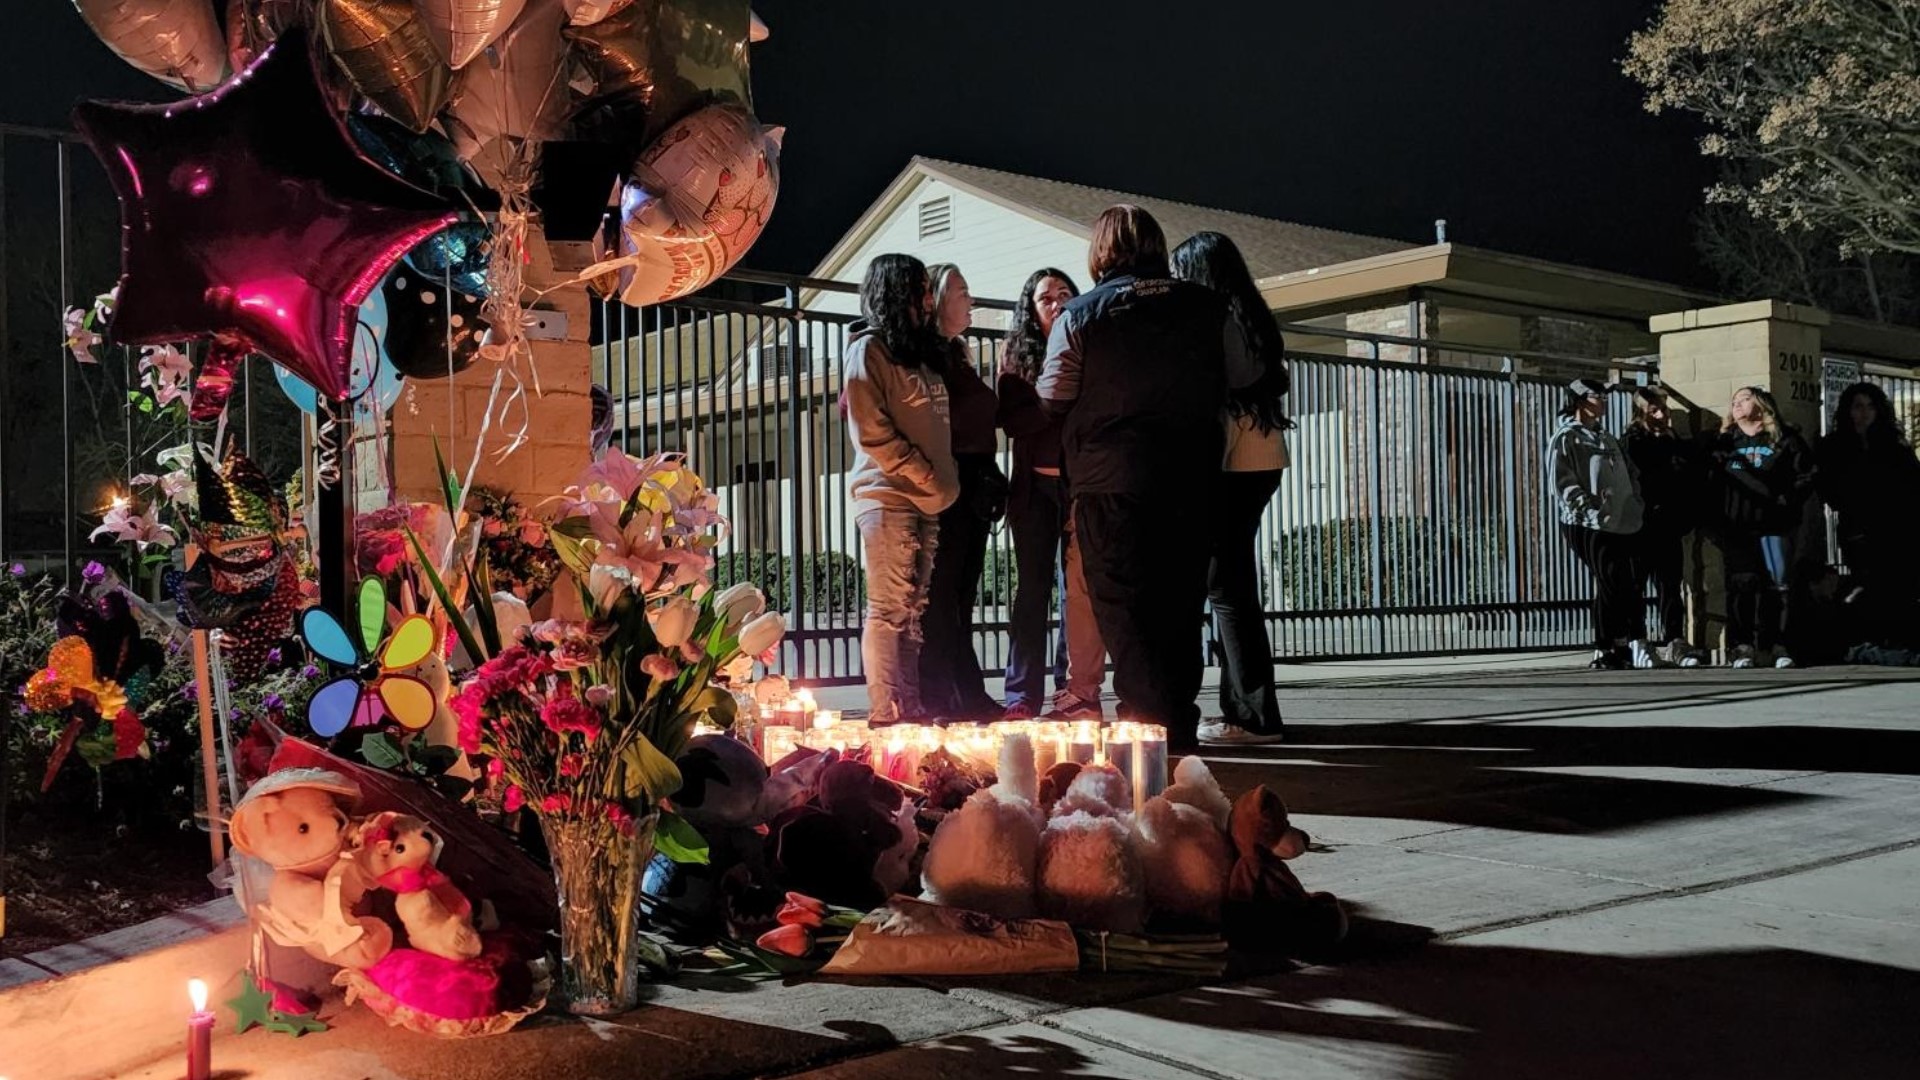 The victims were identified as Samantha Mora Gutierrez, 10; Samarah Mora Gutierrez, 9; Samia Mora Gutierrez, 13; and Nathaniel Kong, 59.